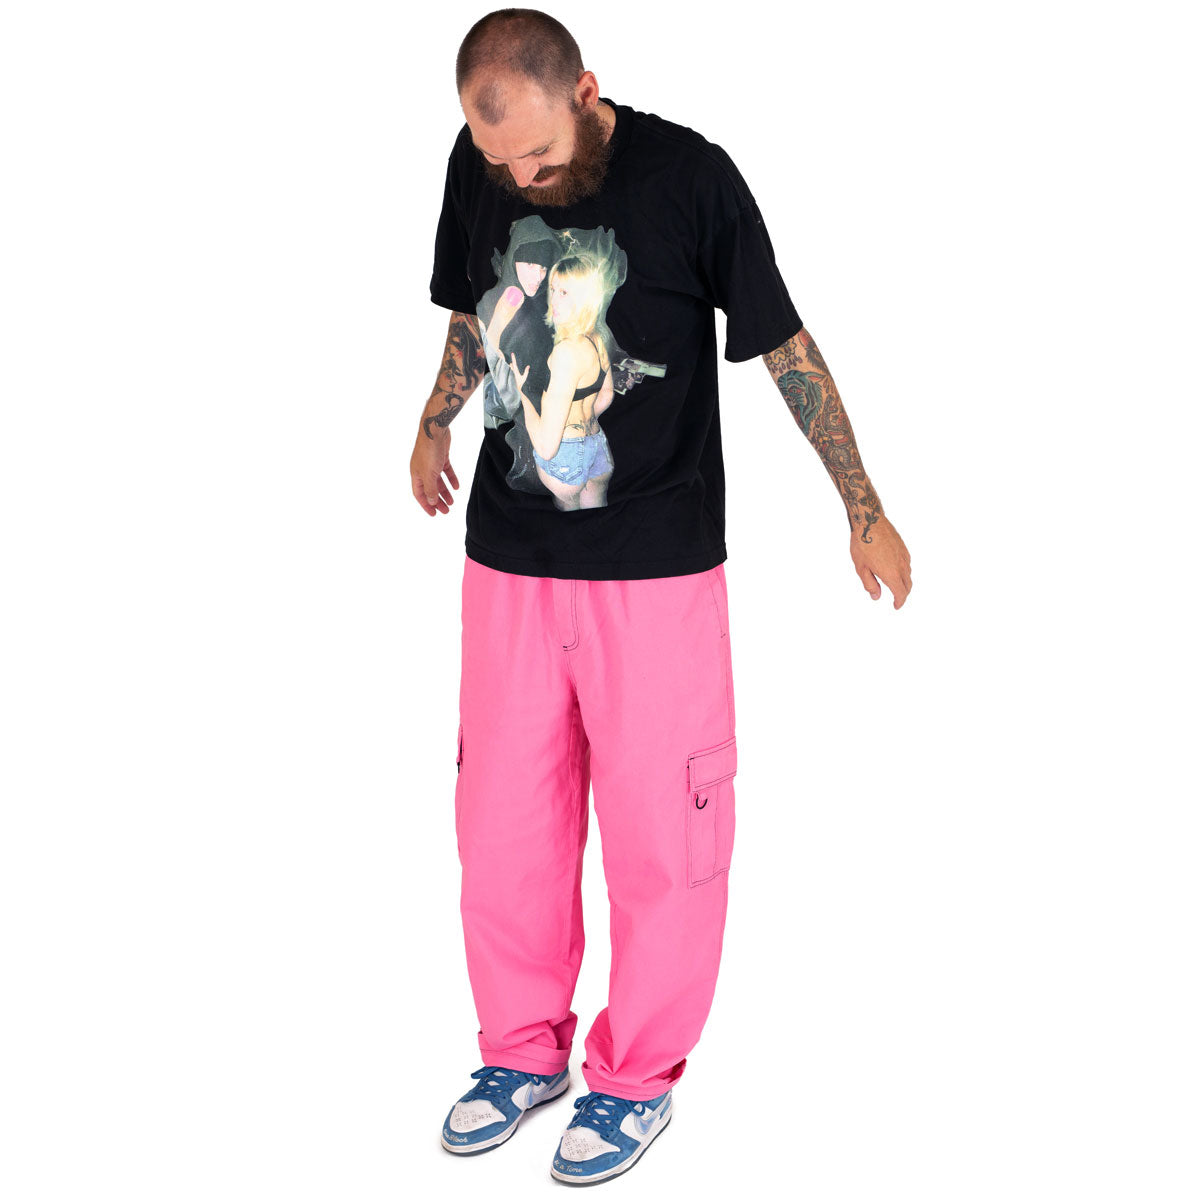 CCS Titus Twill Cargo Pants - Pink/Black image 2